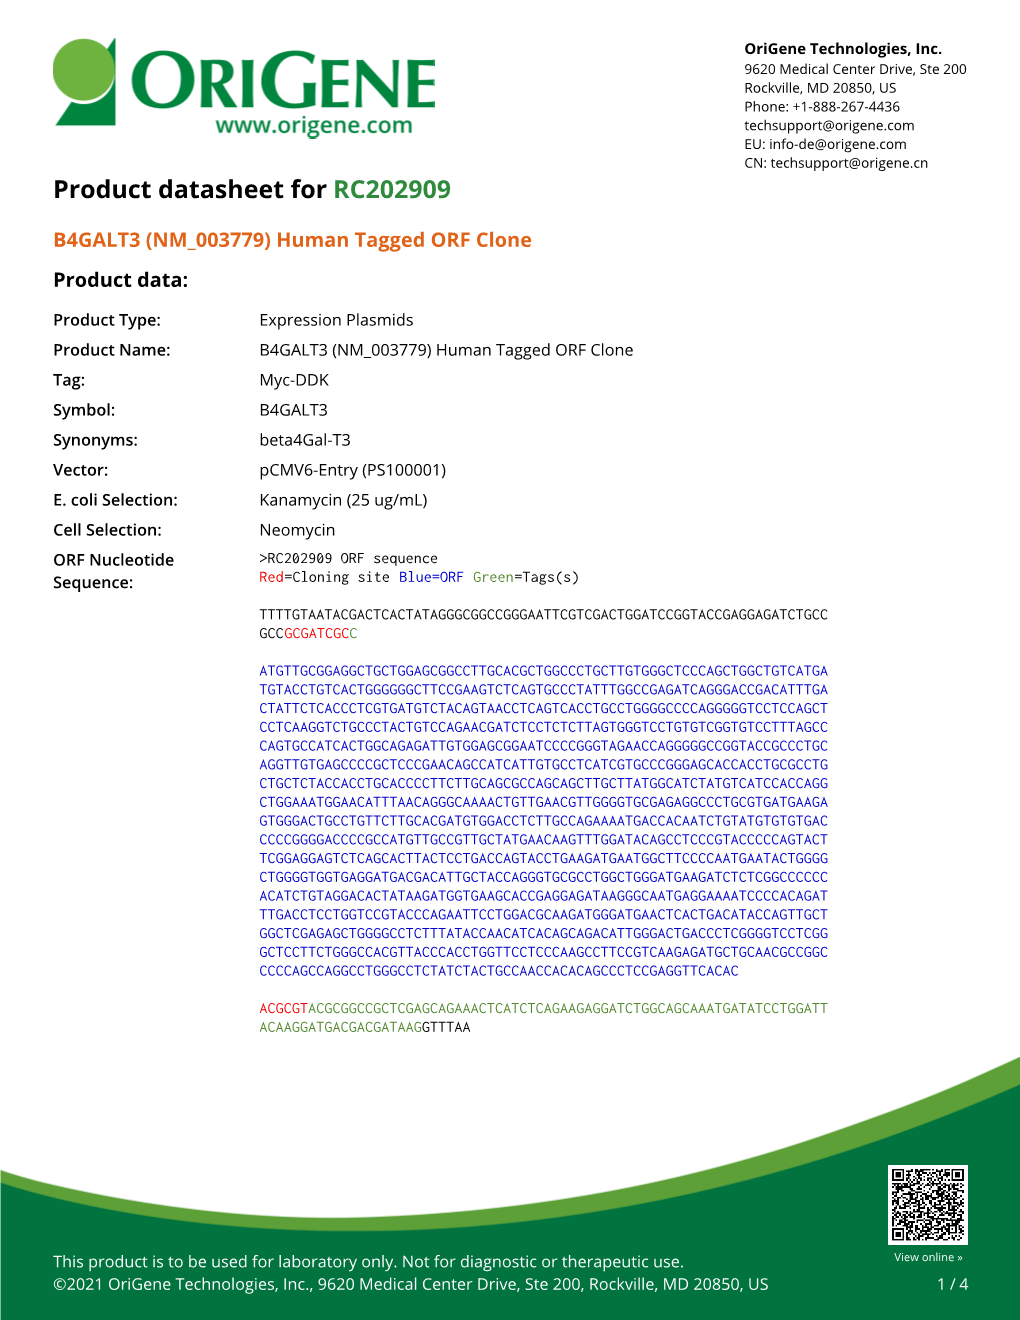 B4GALT3 (NM 003779) Human Tagged ORF Clone Product Data